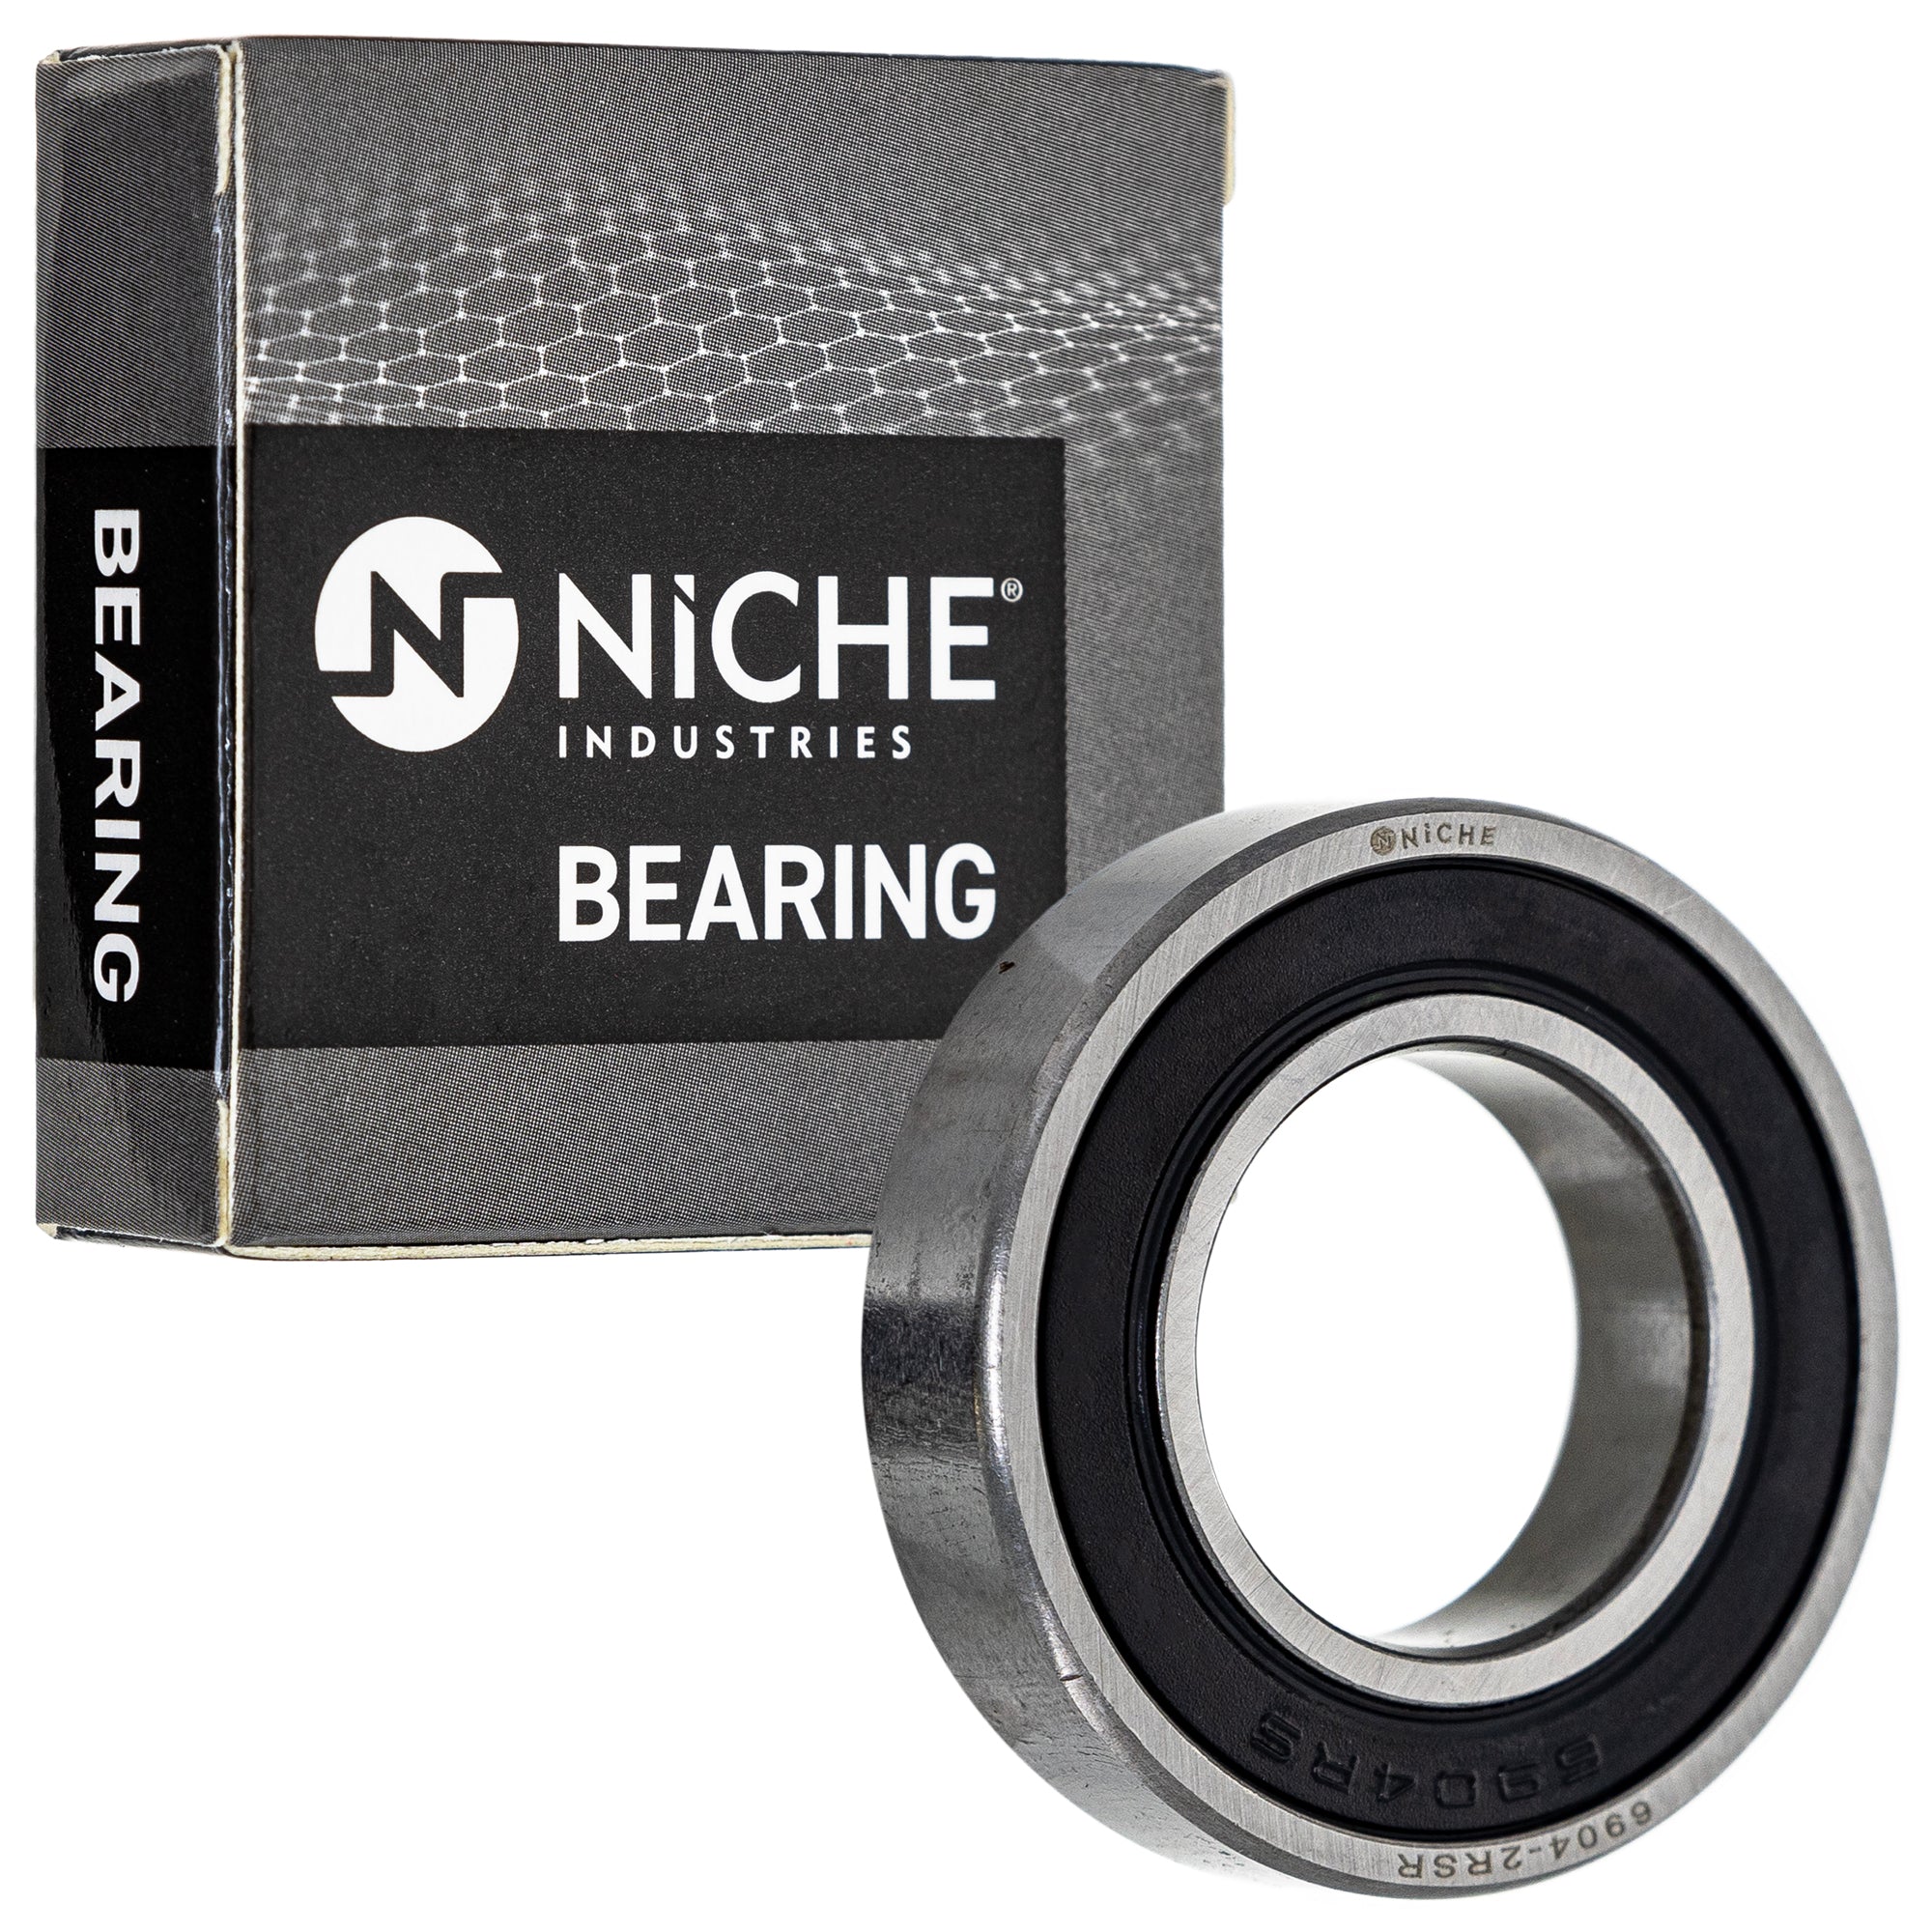 NICHE 519-CBB2287R Bearing for zOTHER YZ85 XR80R XR80 XR75